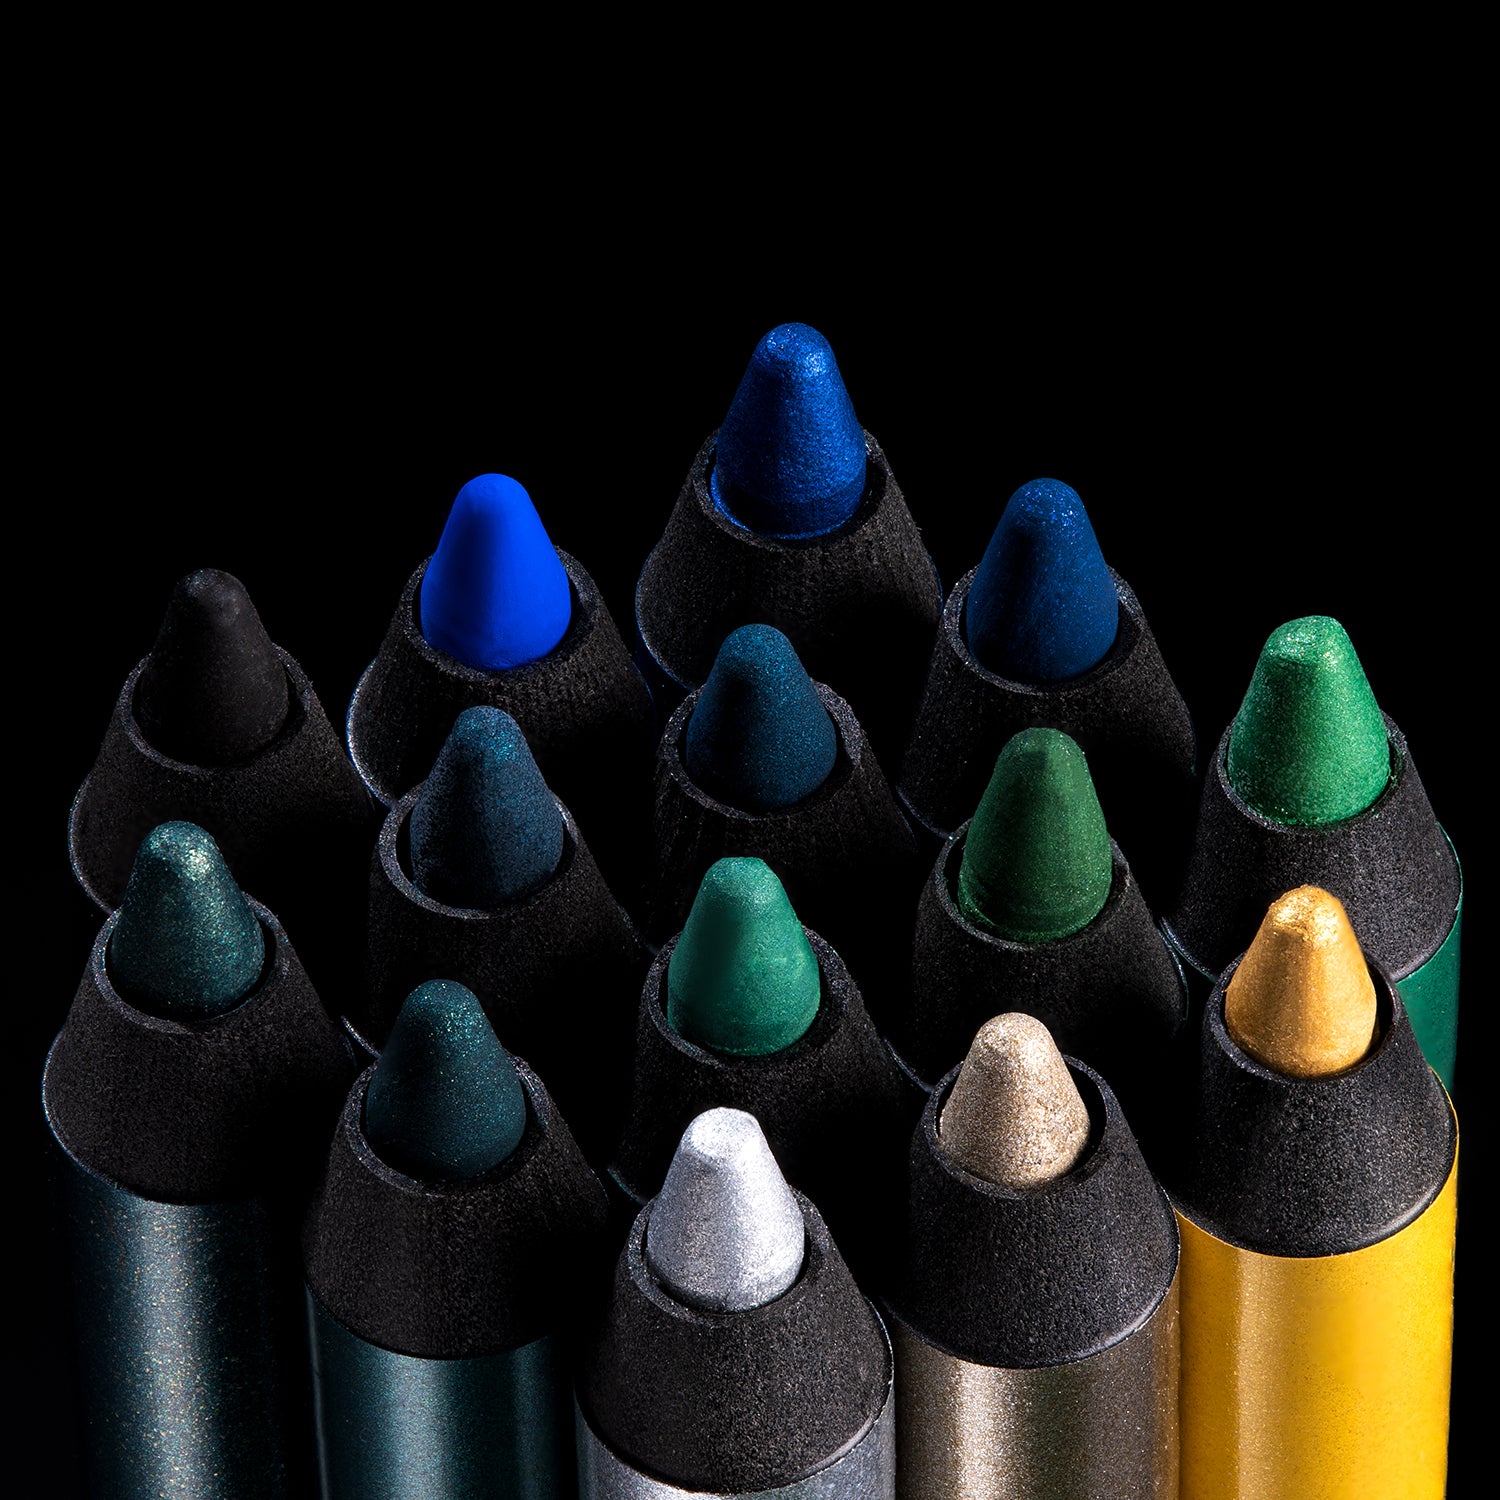 PAC Cosmetics Stay4Ever Gel Eye Pencil (1.6 gm) #Color_Dark Shadow